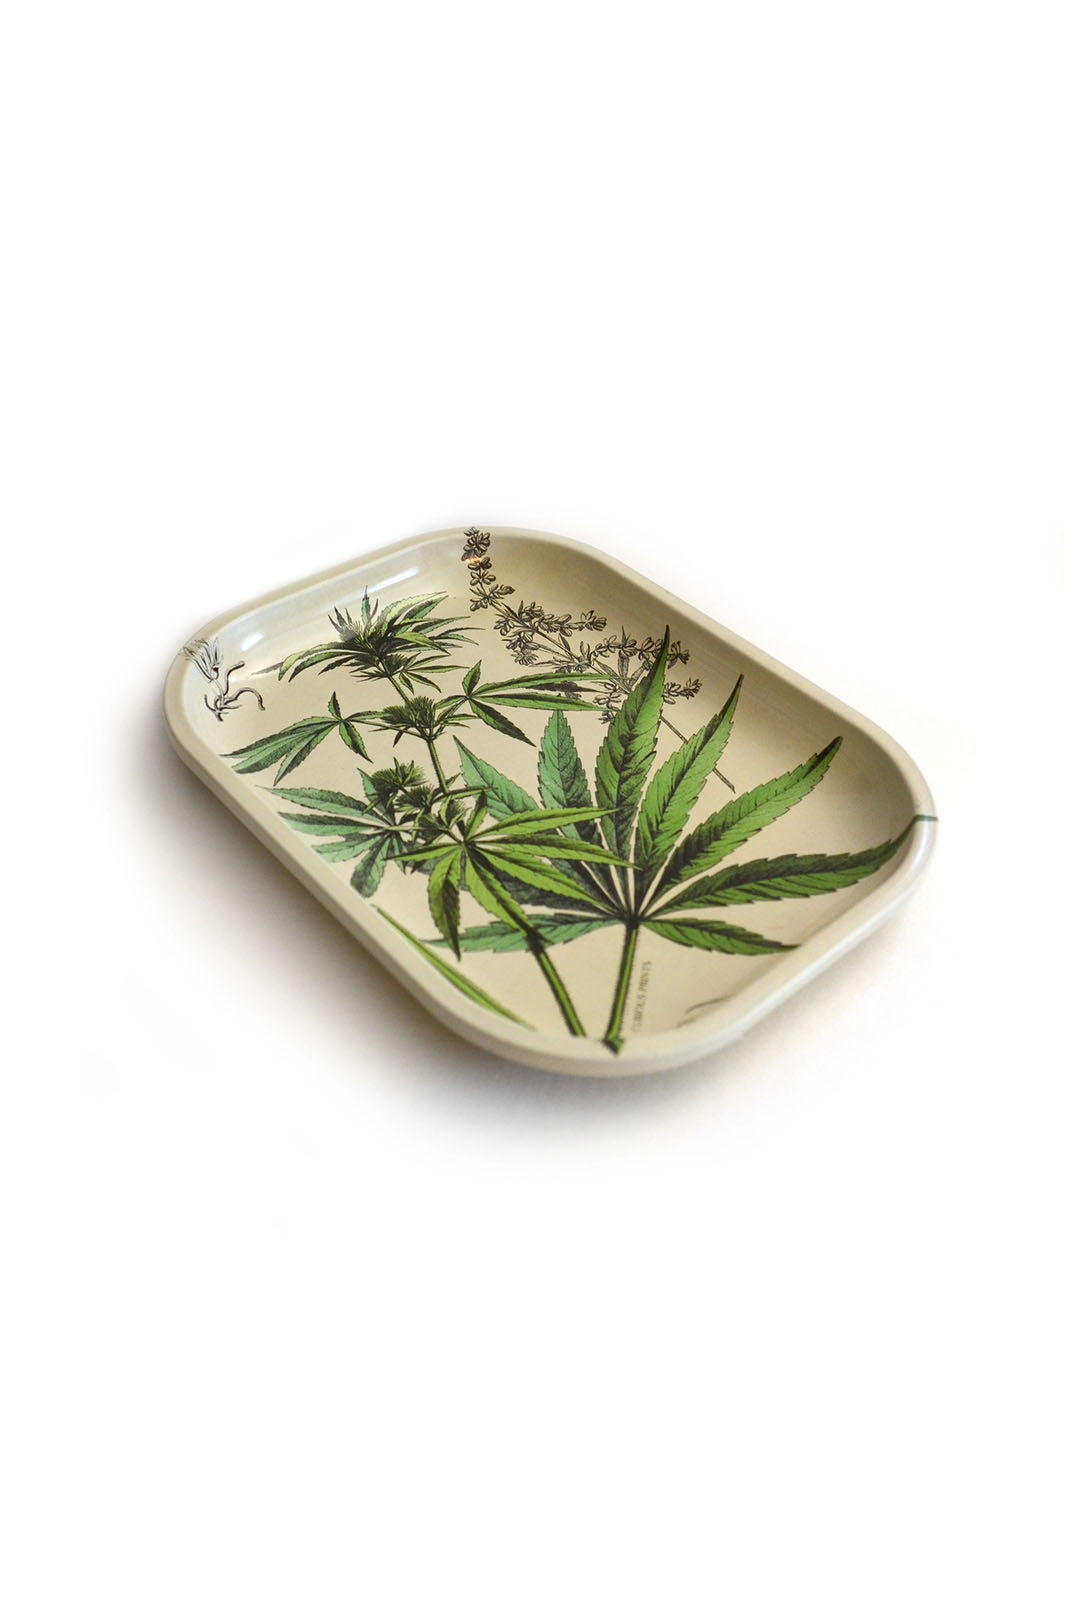 Small Metal Tray - Vintage Cannabis and Botanical Print